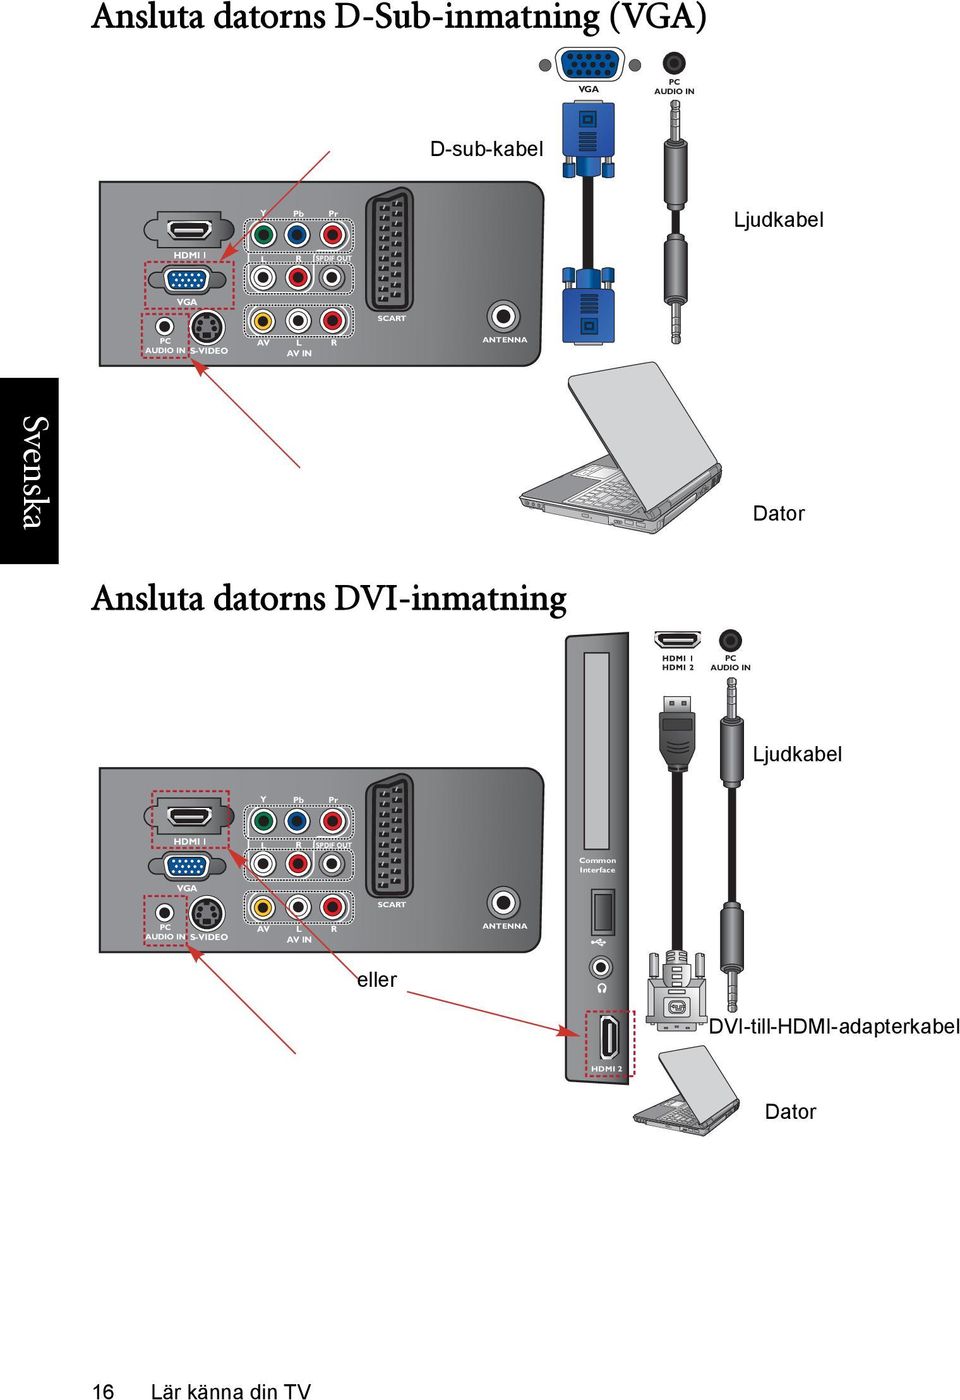 DVI-inmatning PC AUDIO IN Ljudkabel Y Pb Pr HDMI 1 L R SPDIF OUT Common Interface VGA SCART